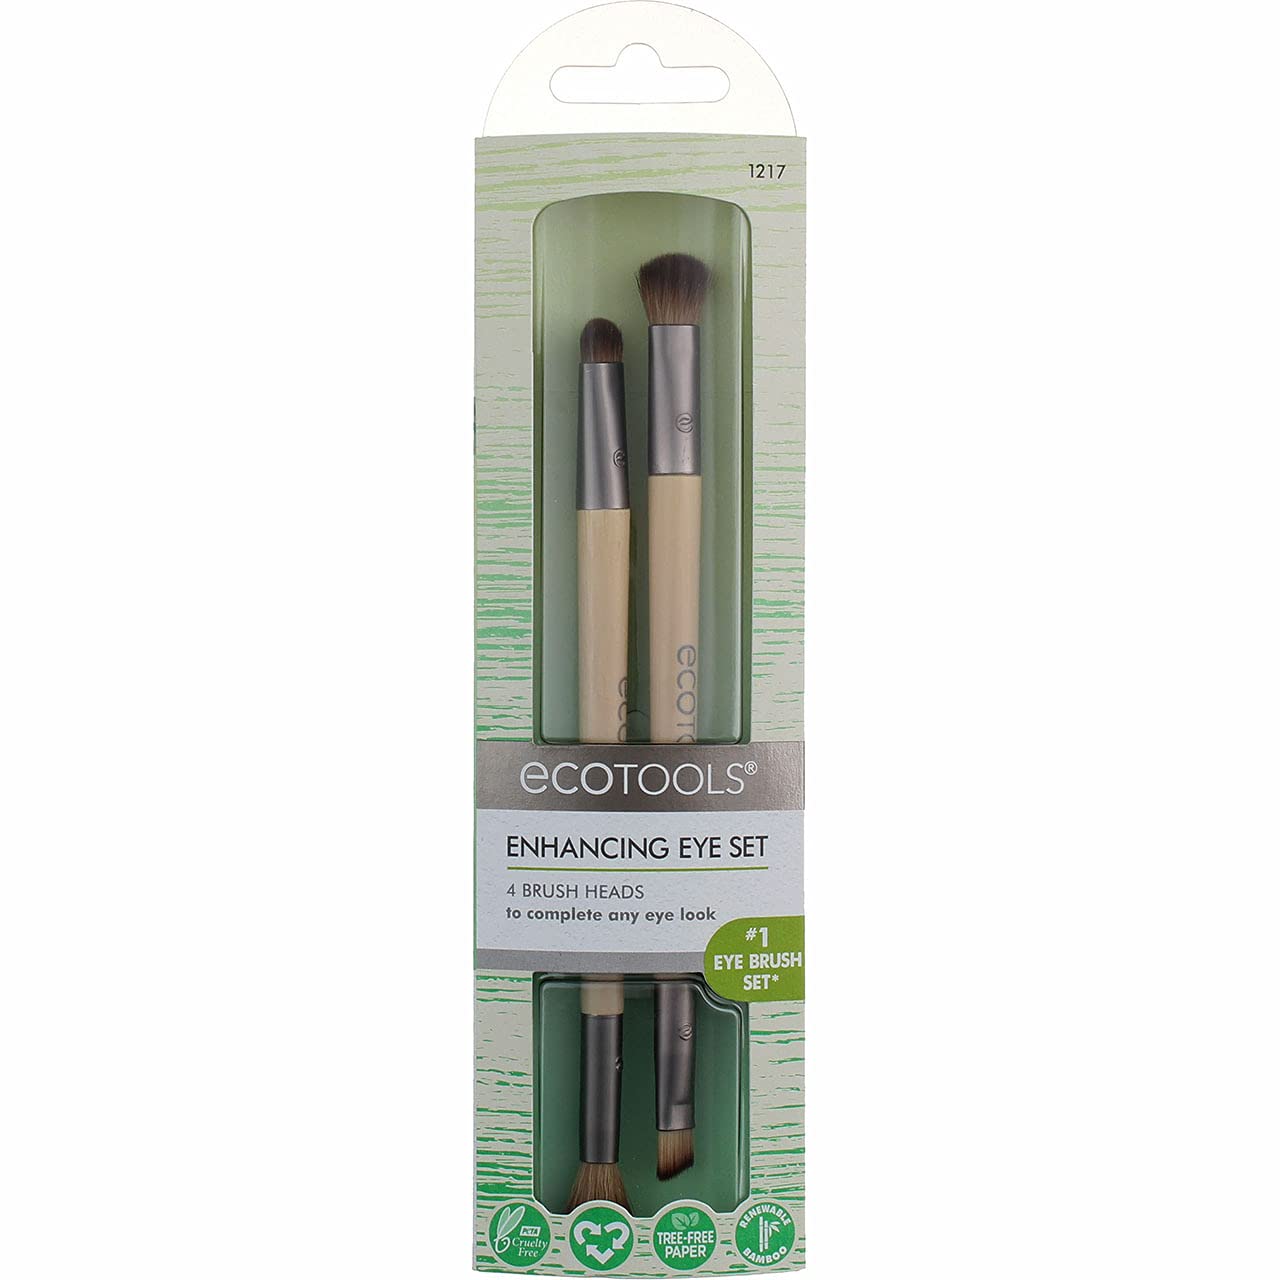 Eco Tools Eye Enhancing Duo Brush Set (Pack of 2) Makeup Brush- #Royalkart#ecotools brush set